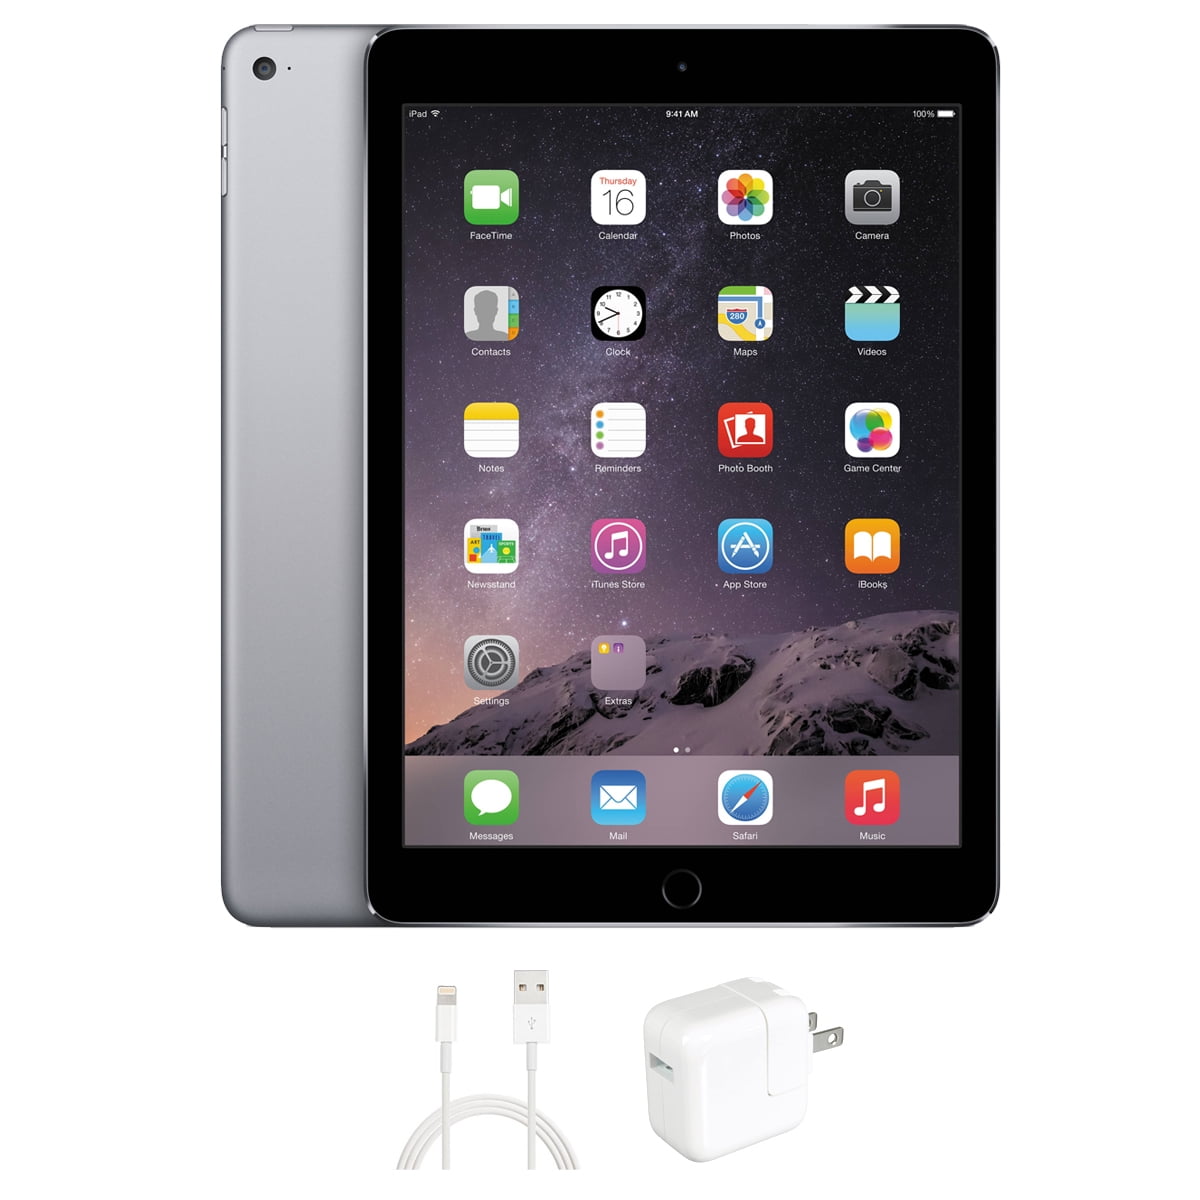 Apple iPad 2017 (Refurbished) Wi-Fi 32GB - Space Gray - Walmart.com